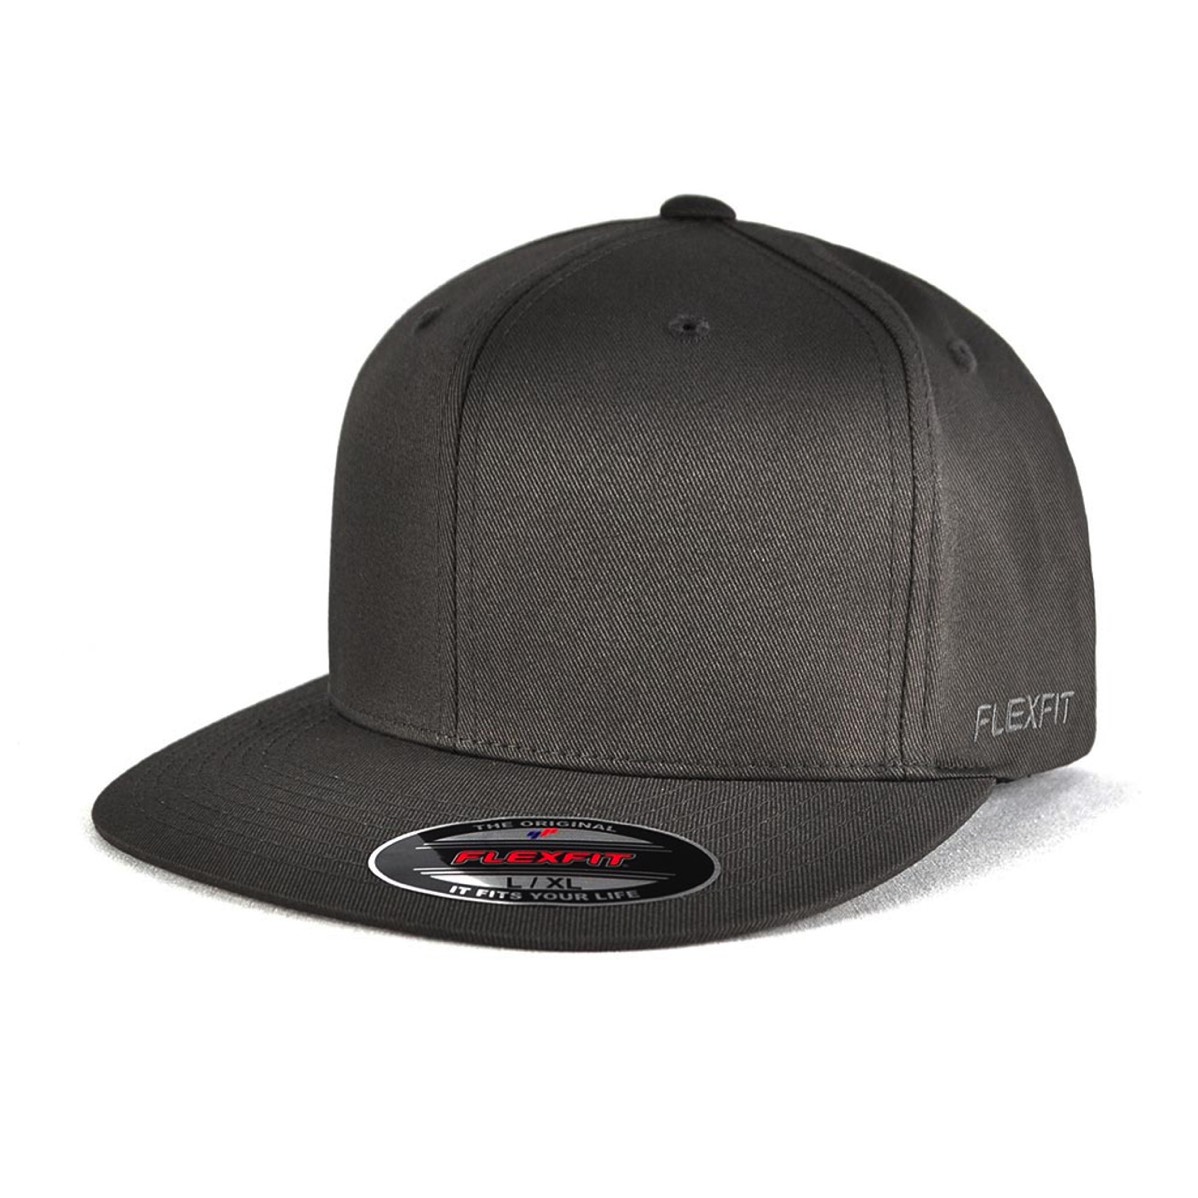 elevate flexfit cap styles available